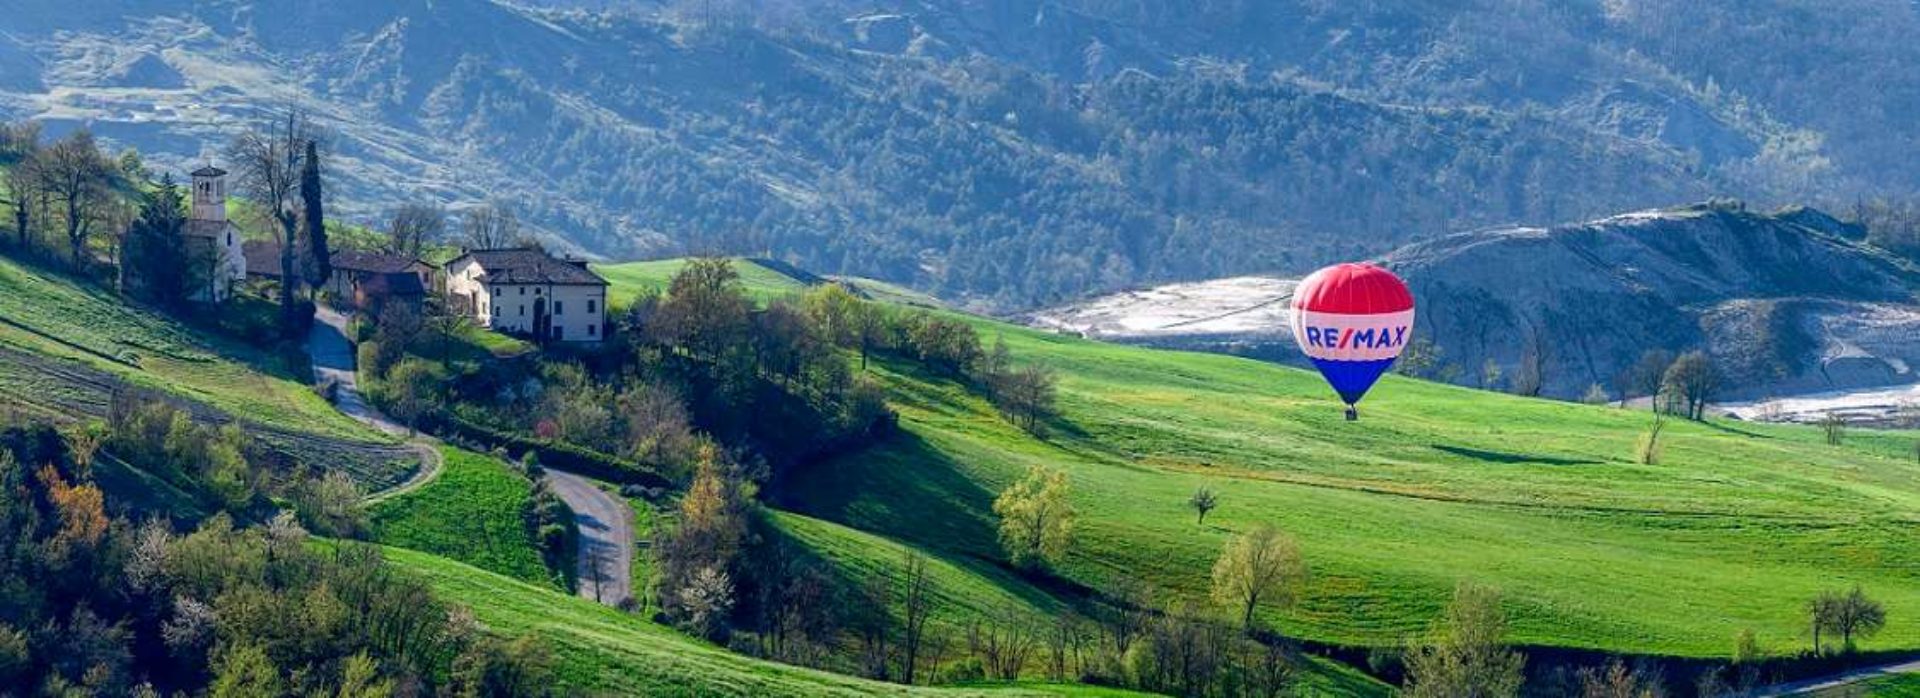 Hot Air Balloon Rides Carpineti